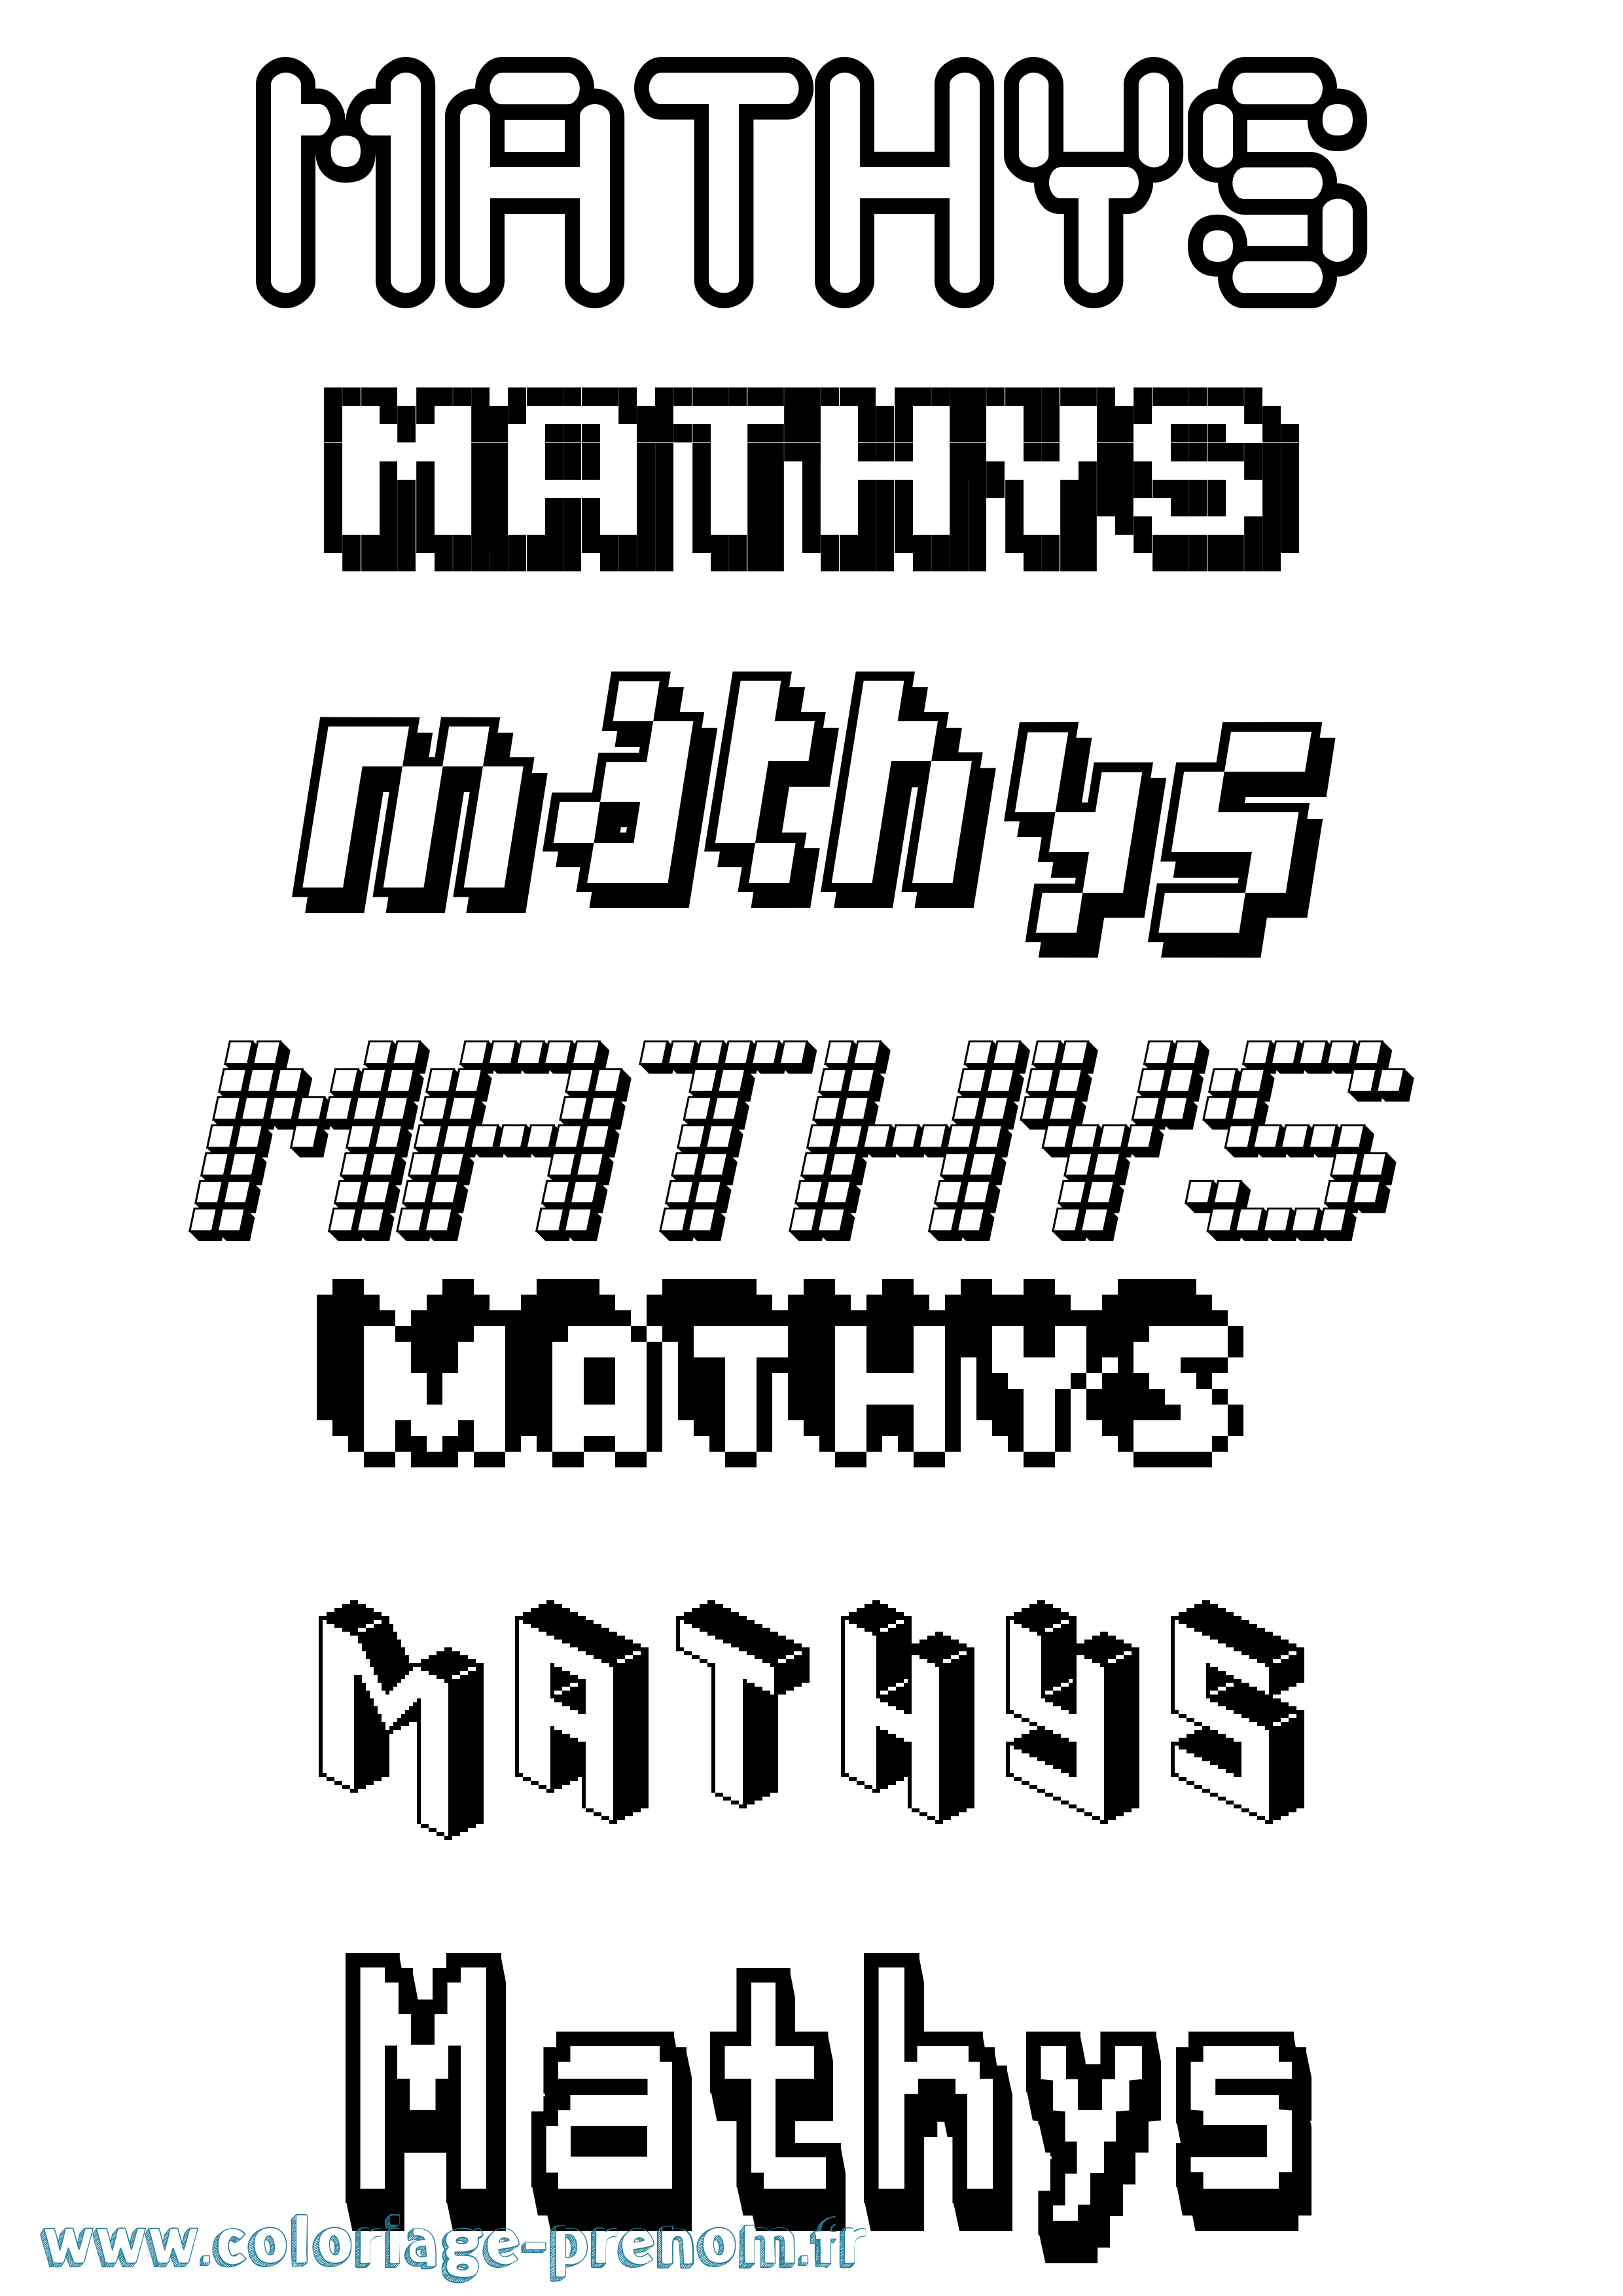 Coloriage prénom Mathys